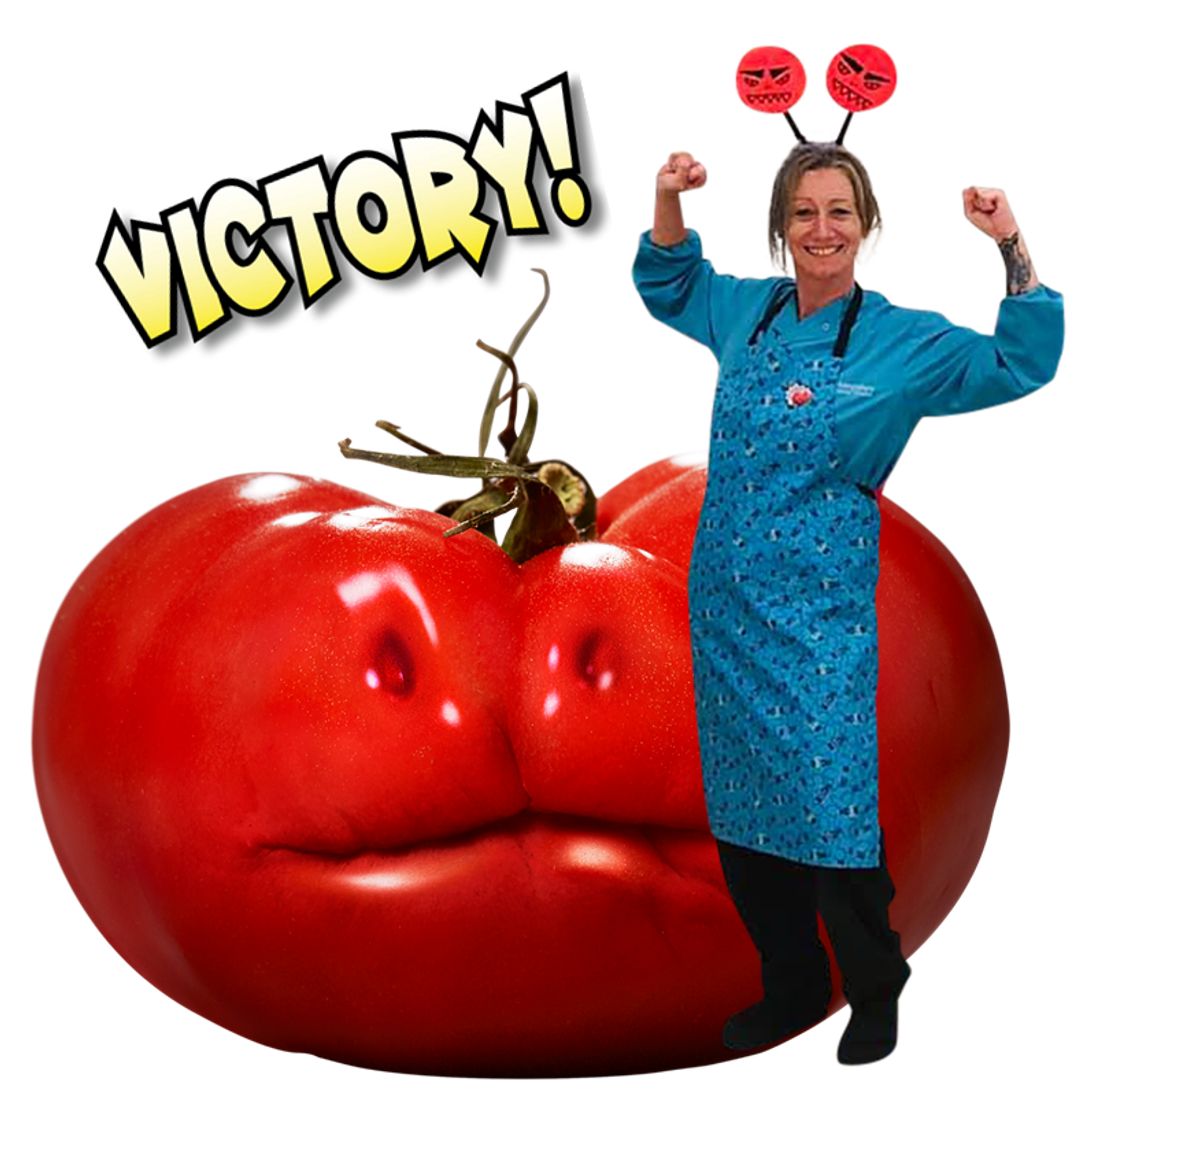 Karen-tomato